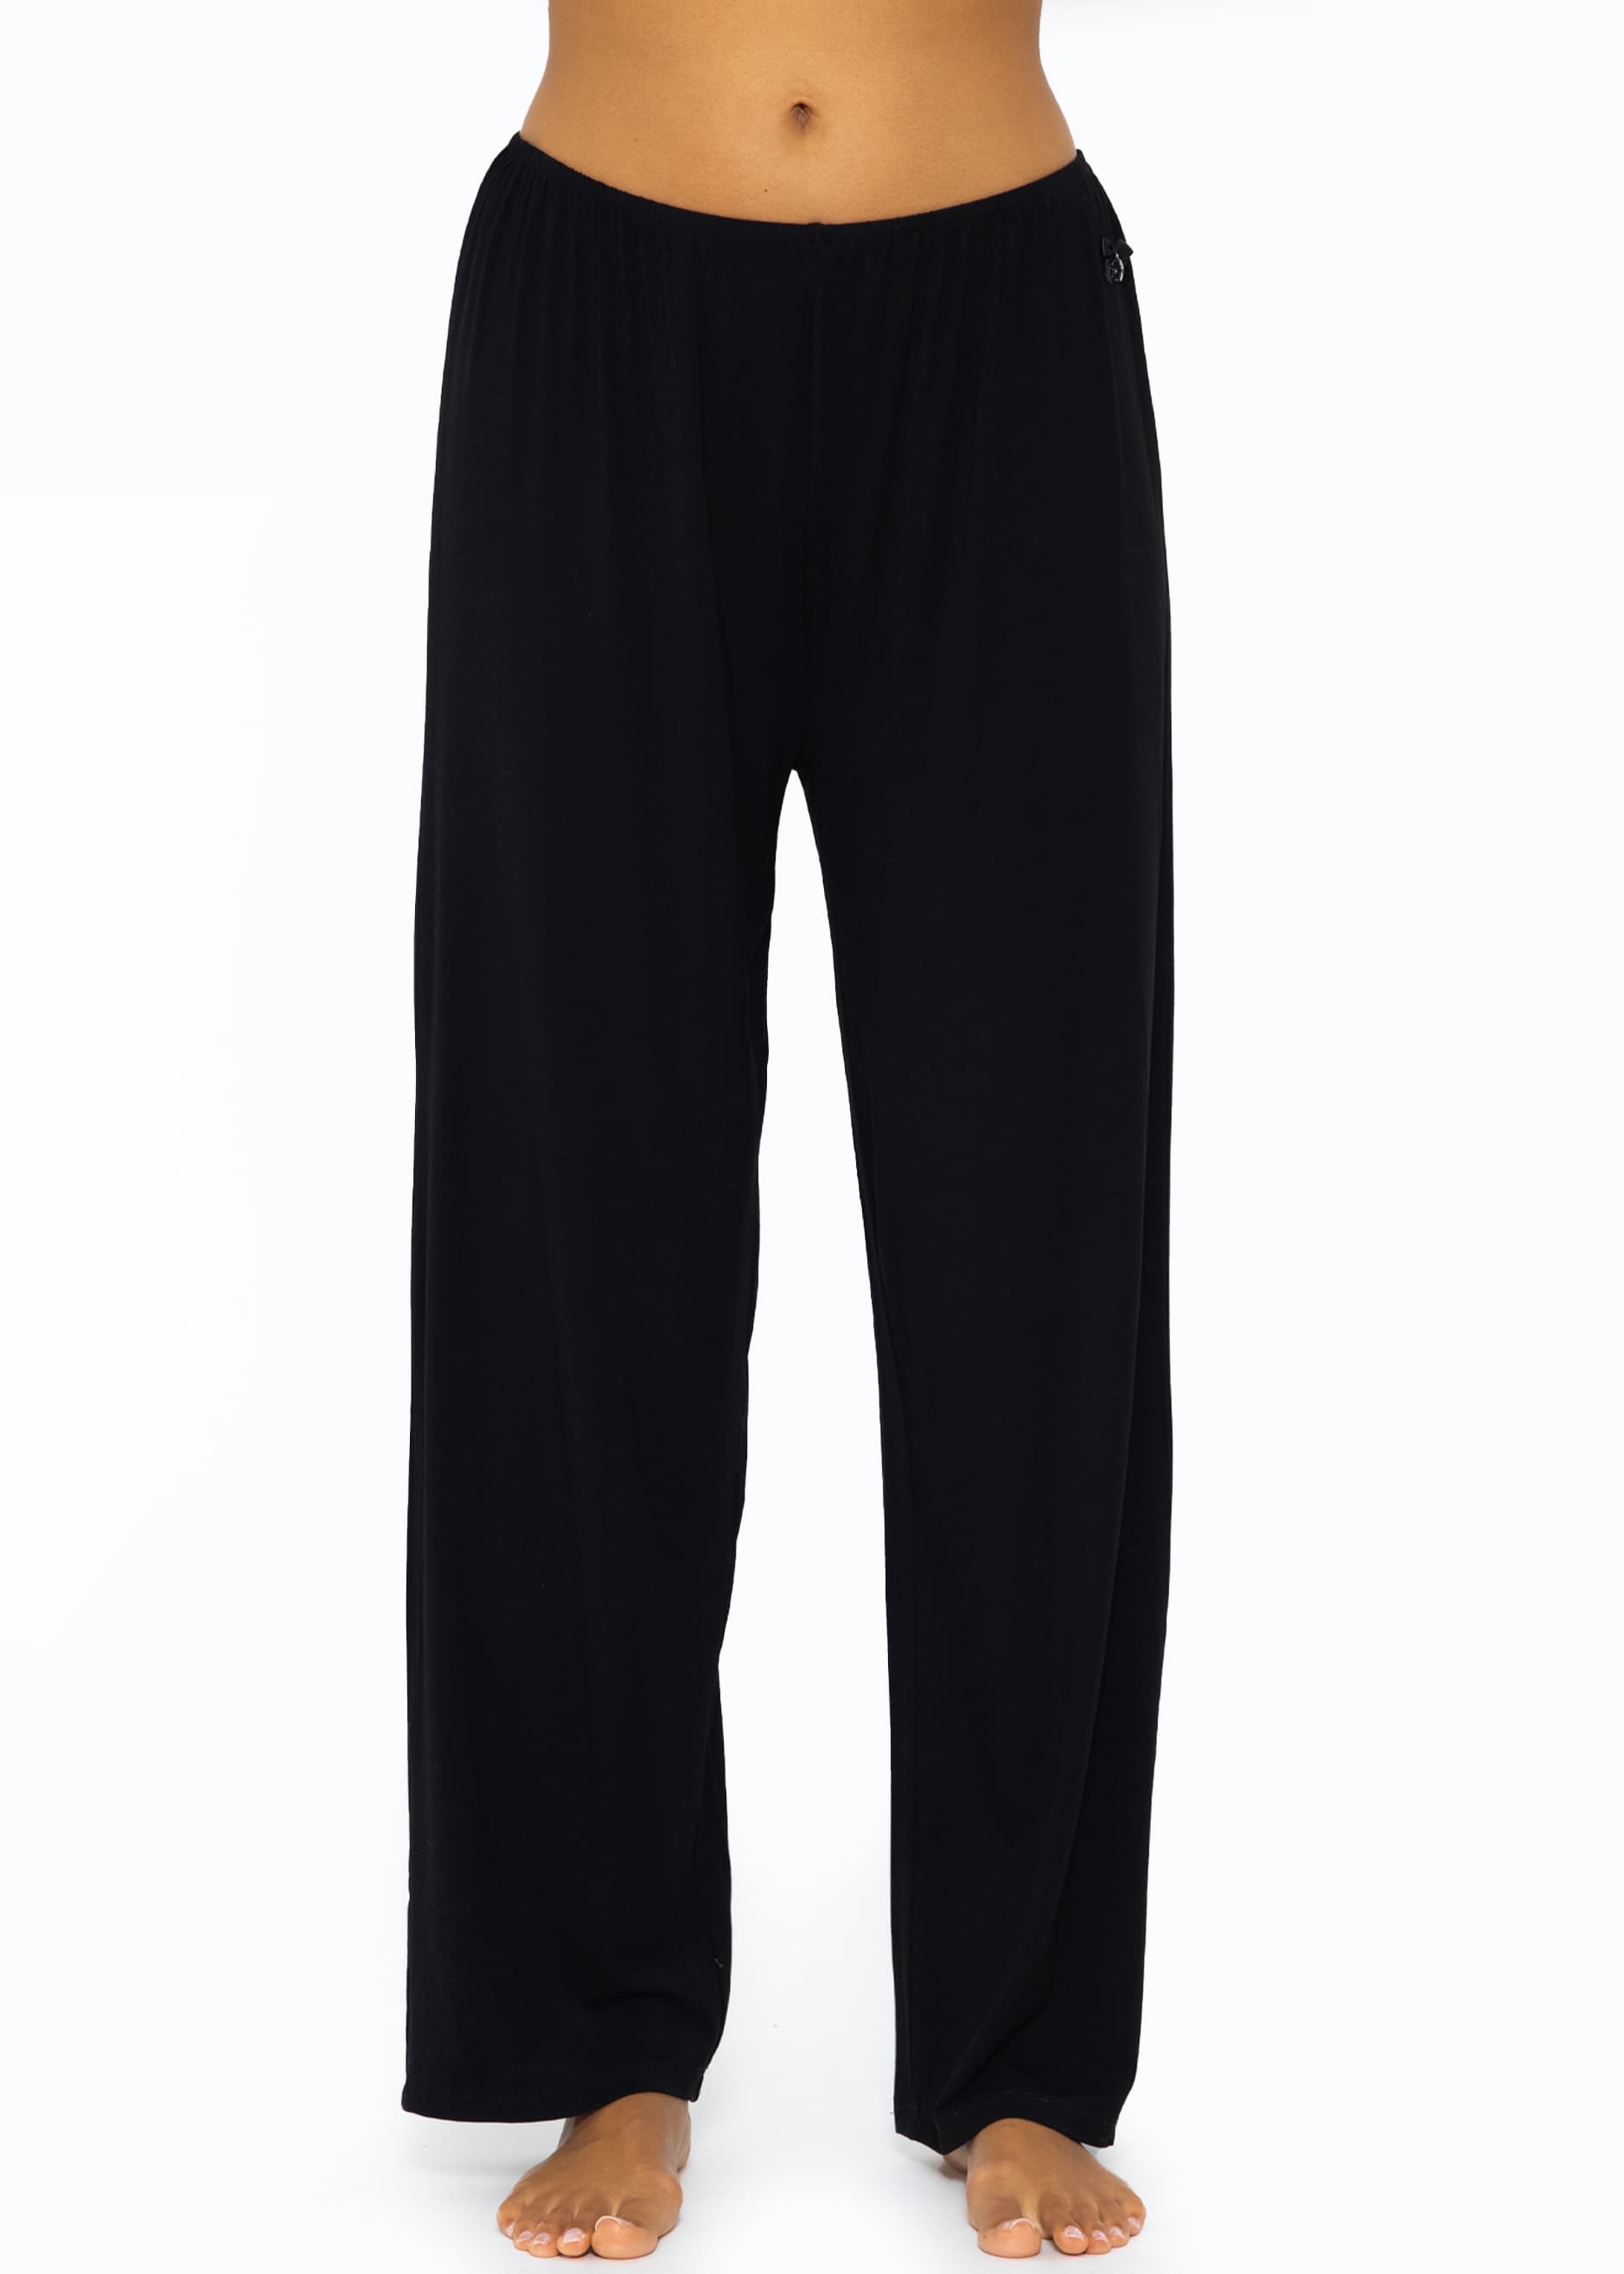 Jersey pyjama pants - black | New Clothing | New Arrivals